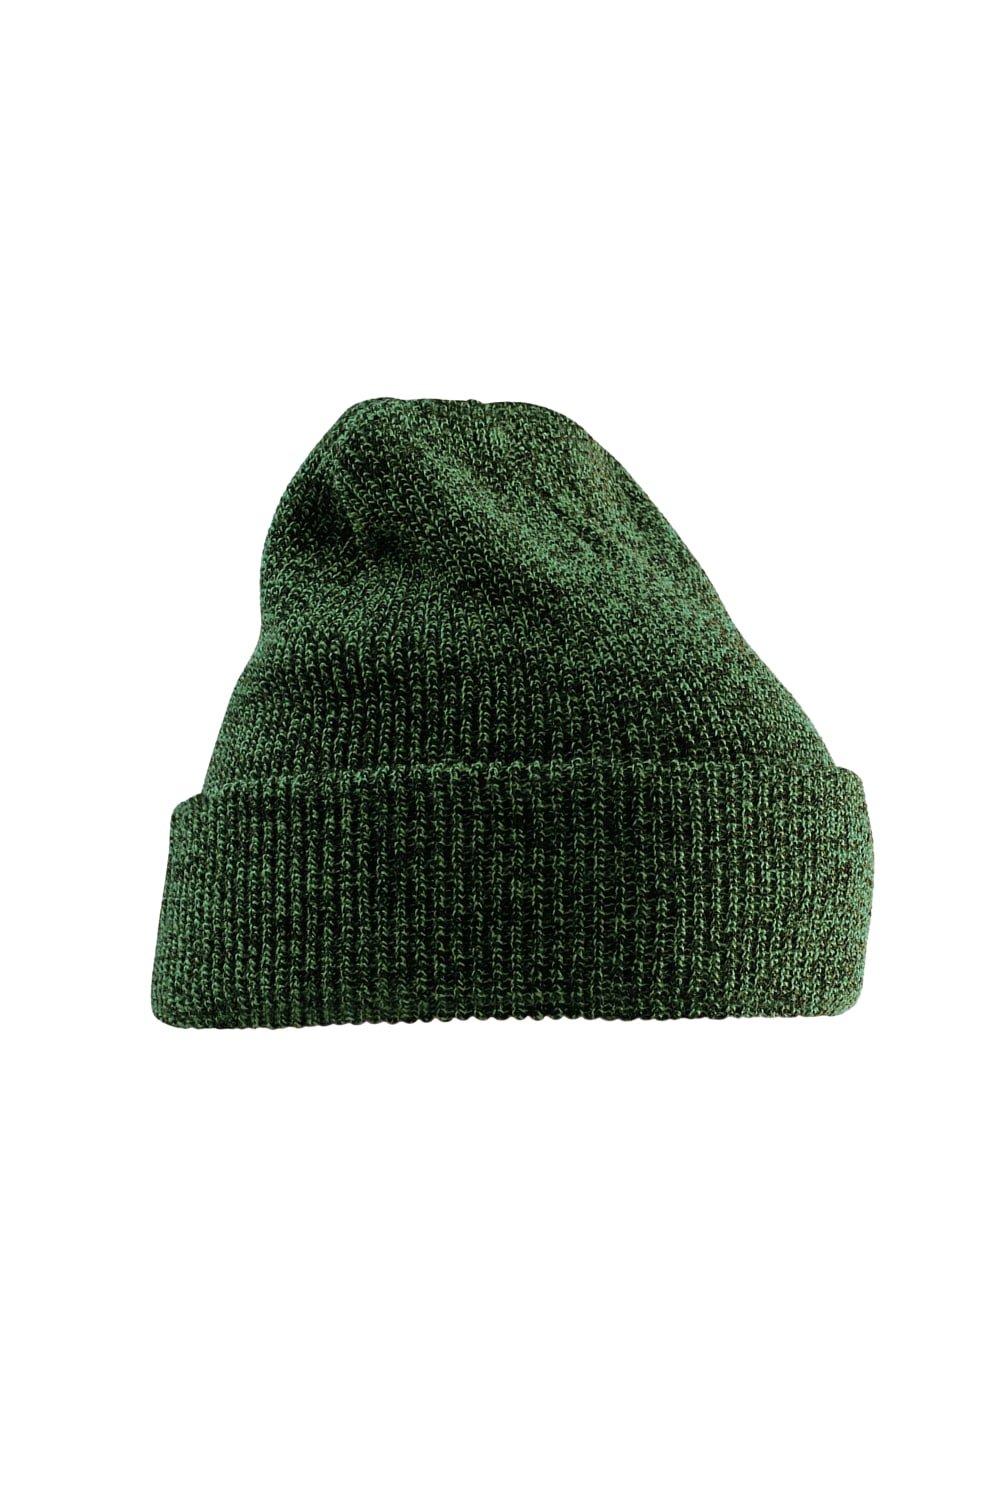 Наследная шапка Beechfield, зеленый